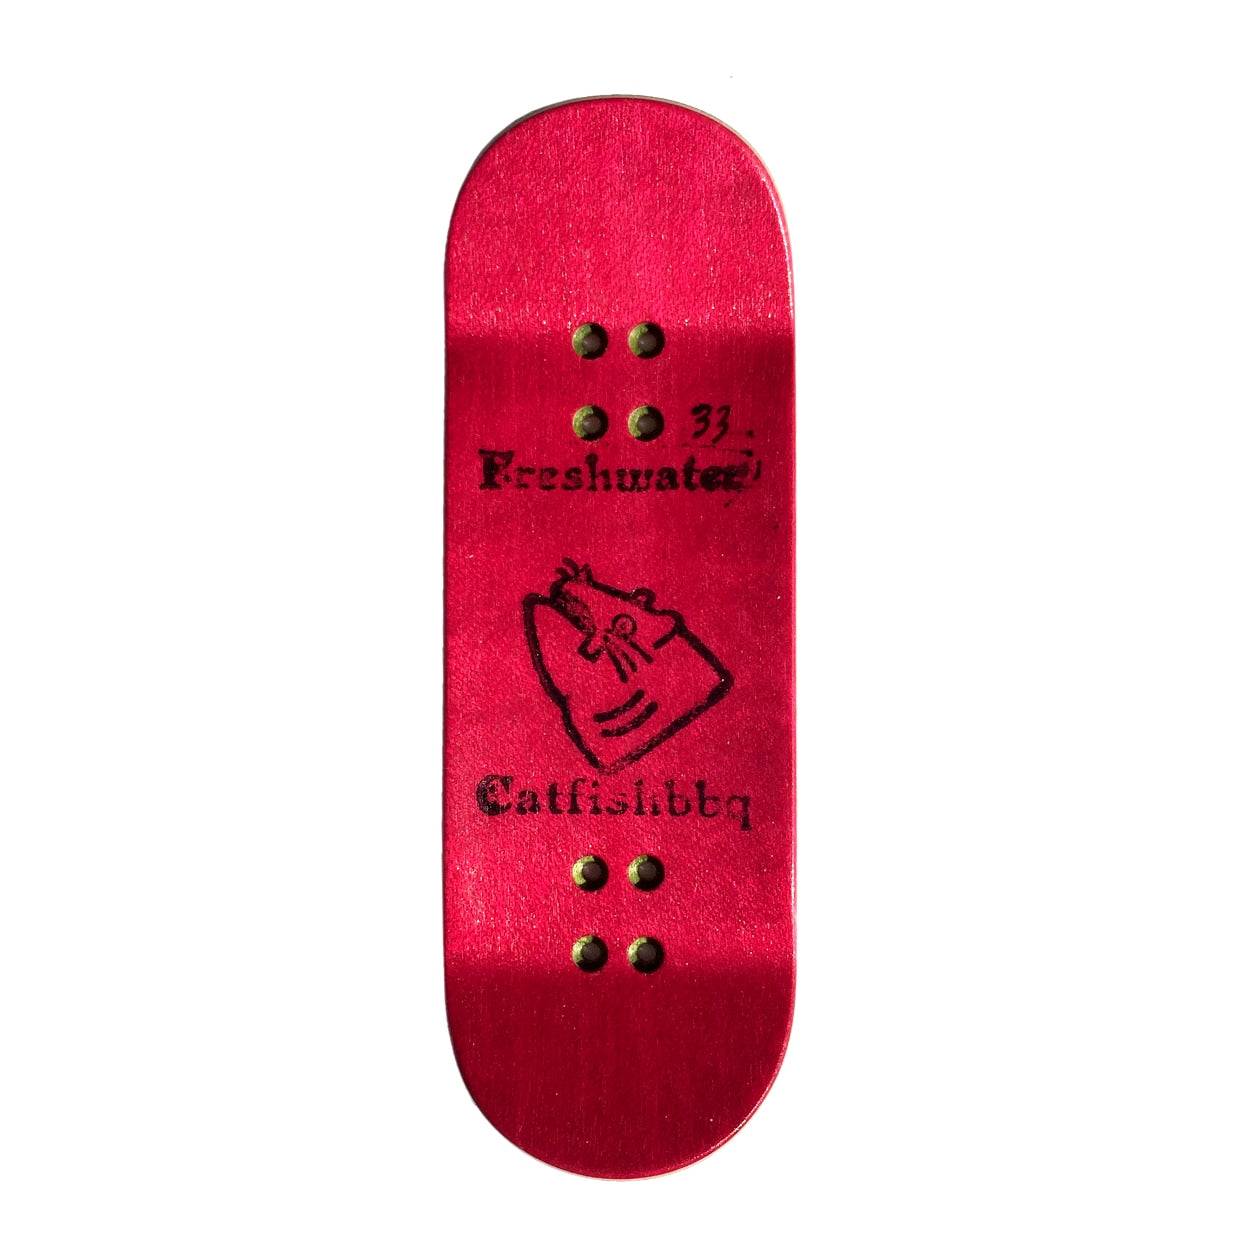 Catfishbbq Red Artshow Fingerboard Deck (Freshwater)